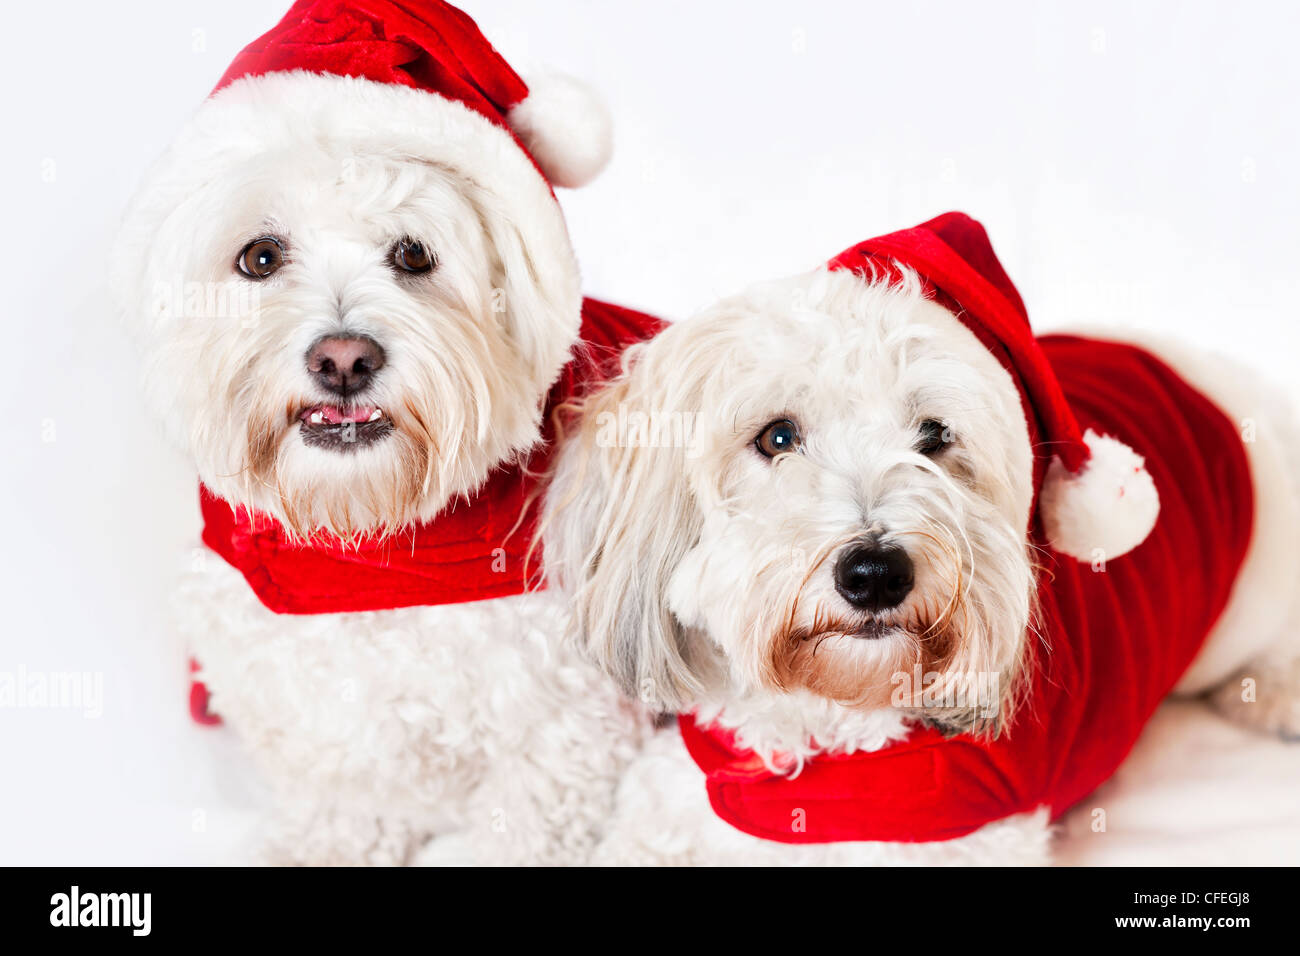 Two adorable coton de tulear dogs wearing santa costumes Stock Photo